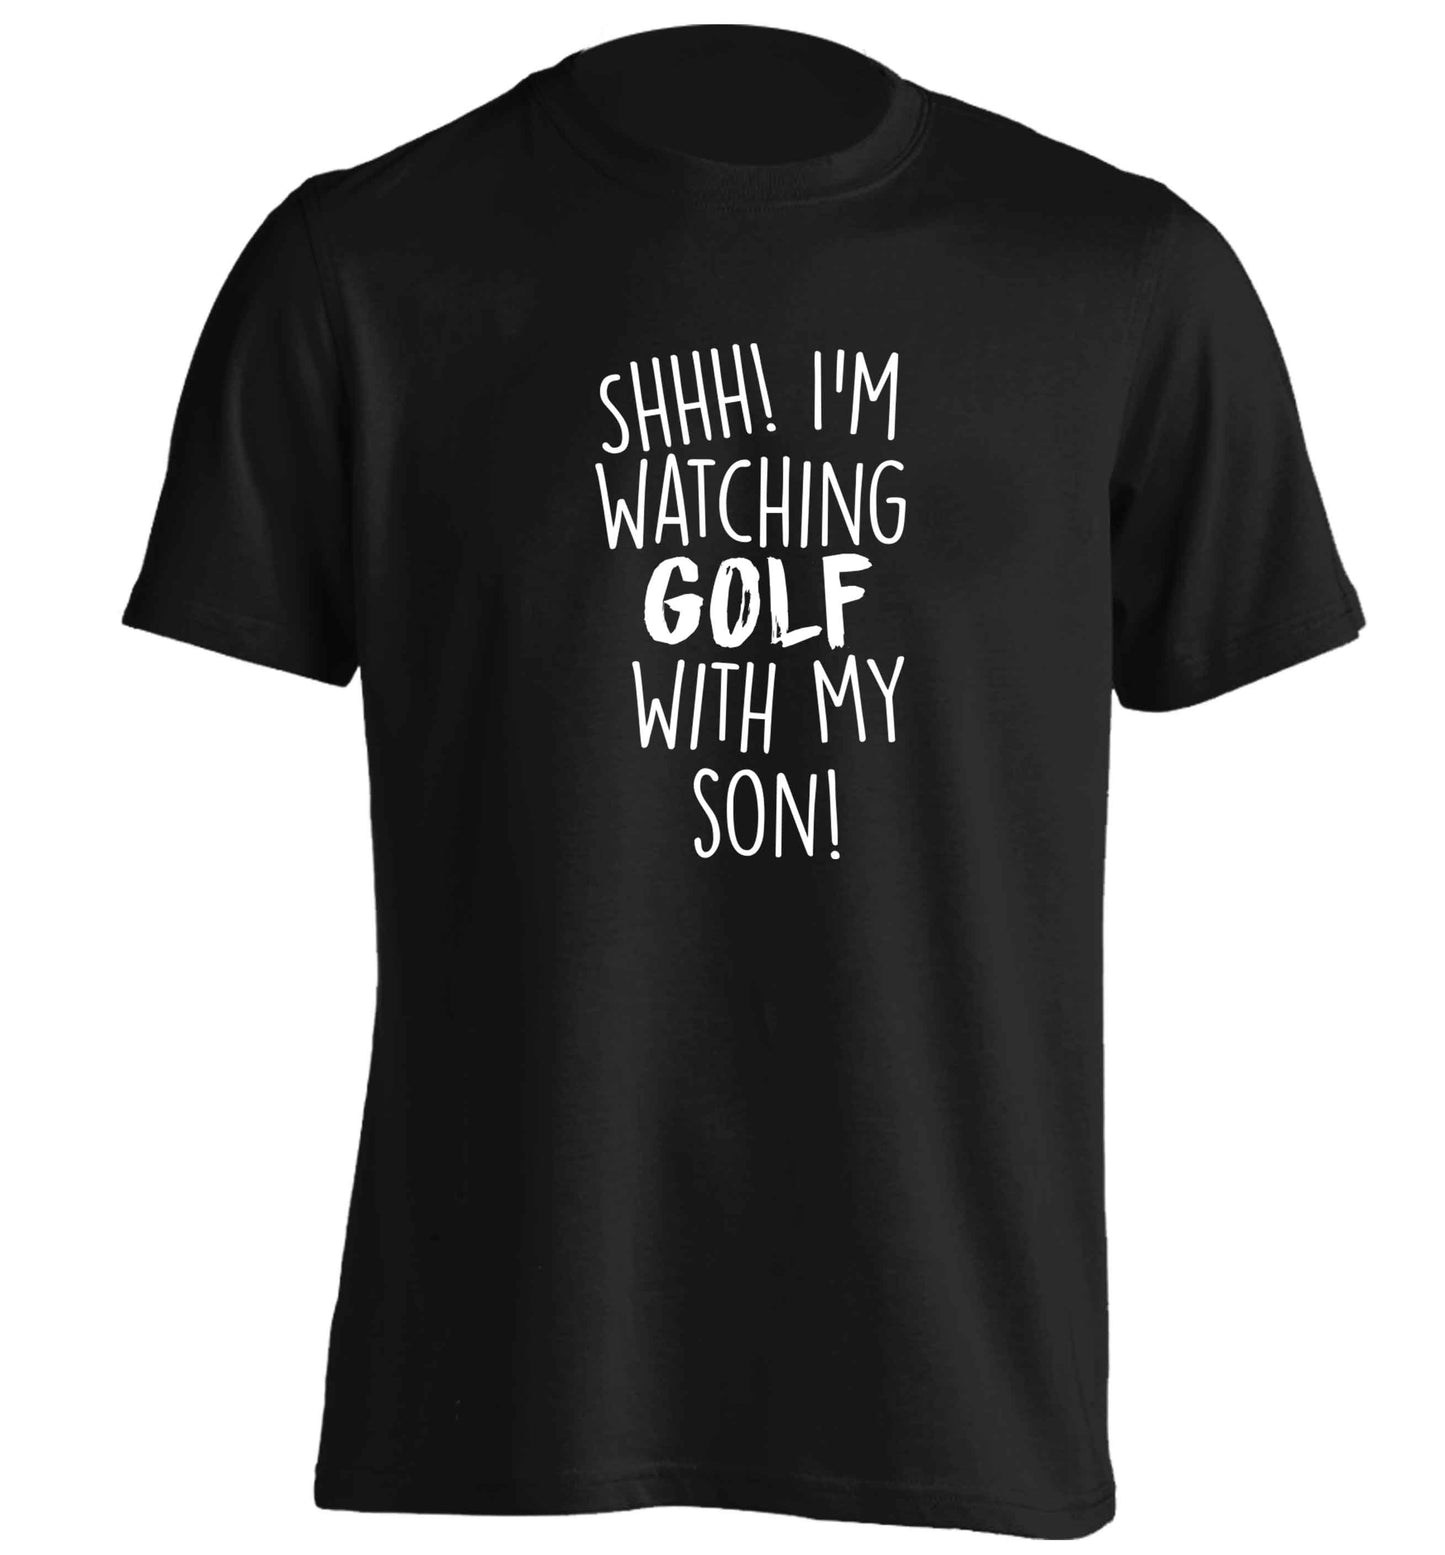 Shh I'm watching golf with my son adults unisex black Tshirt 2XL